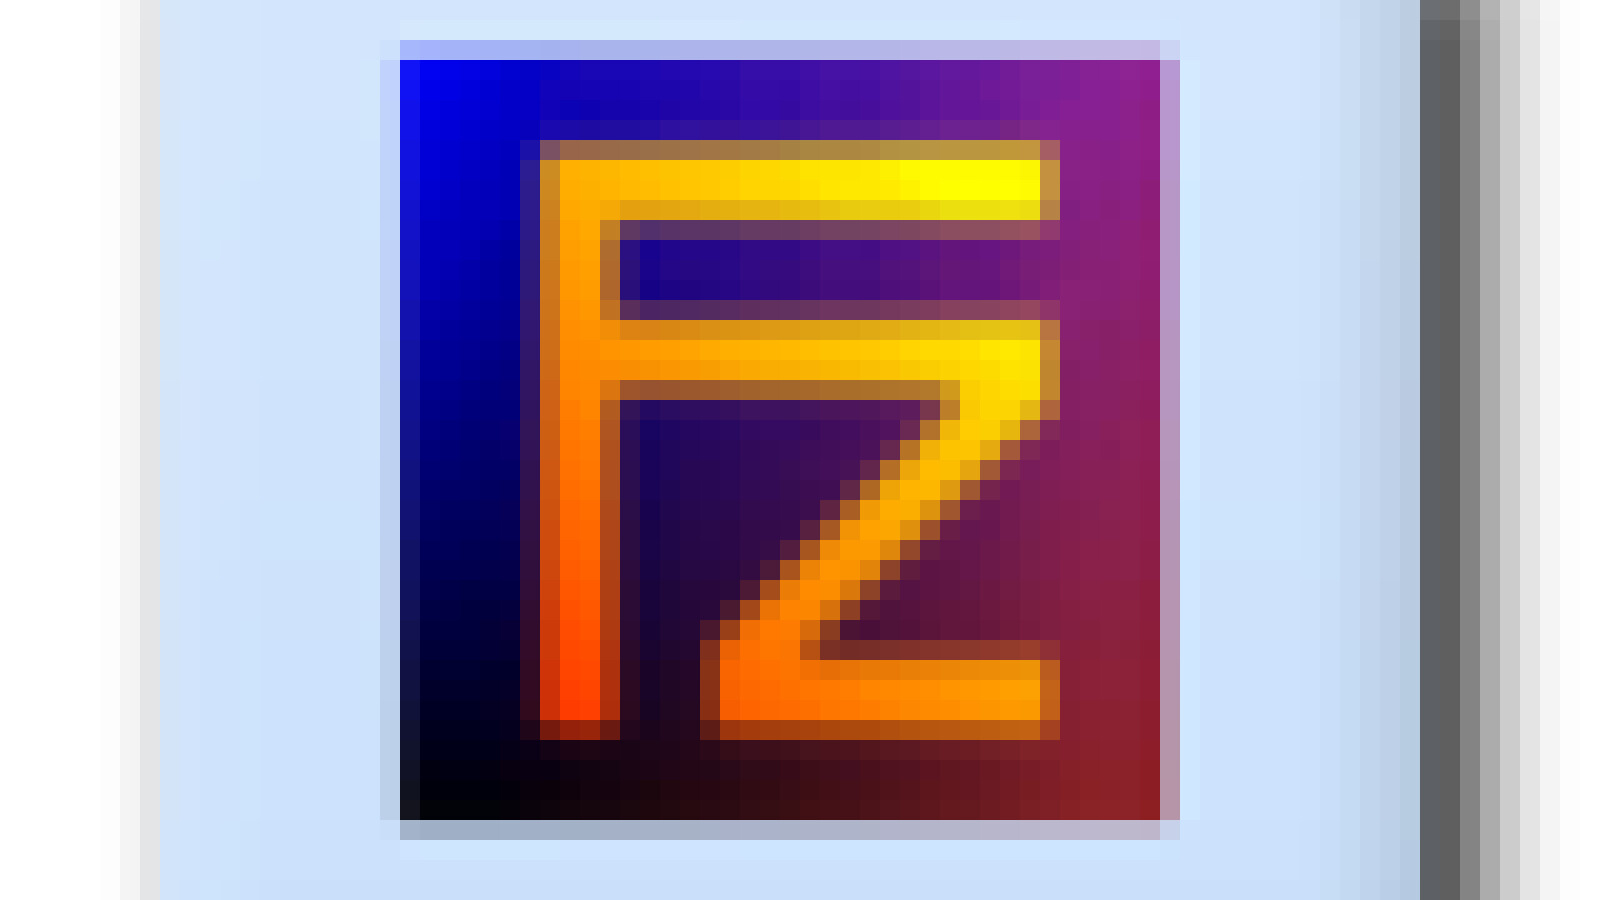 FileZilla 3.66.0 / Pro + Server download the last version for ipod